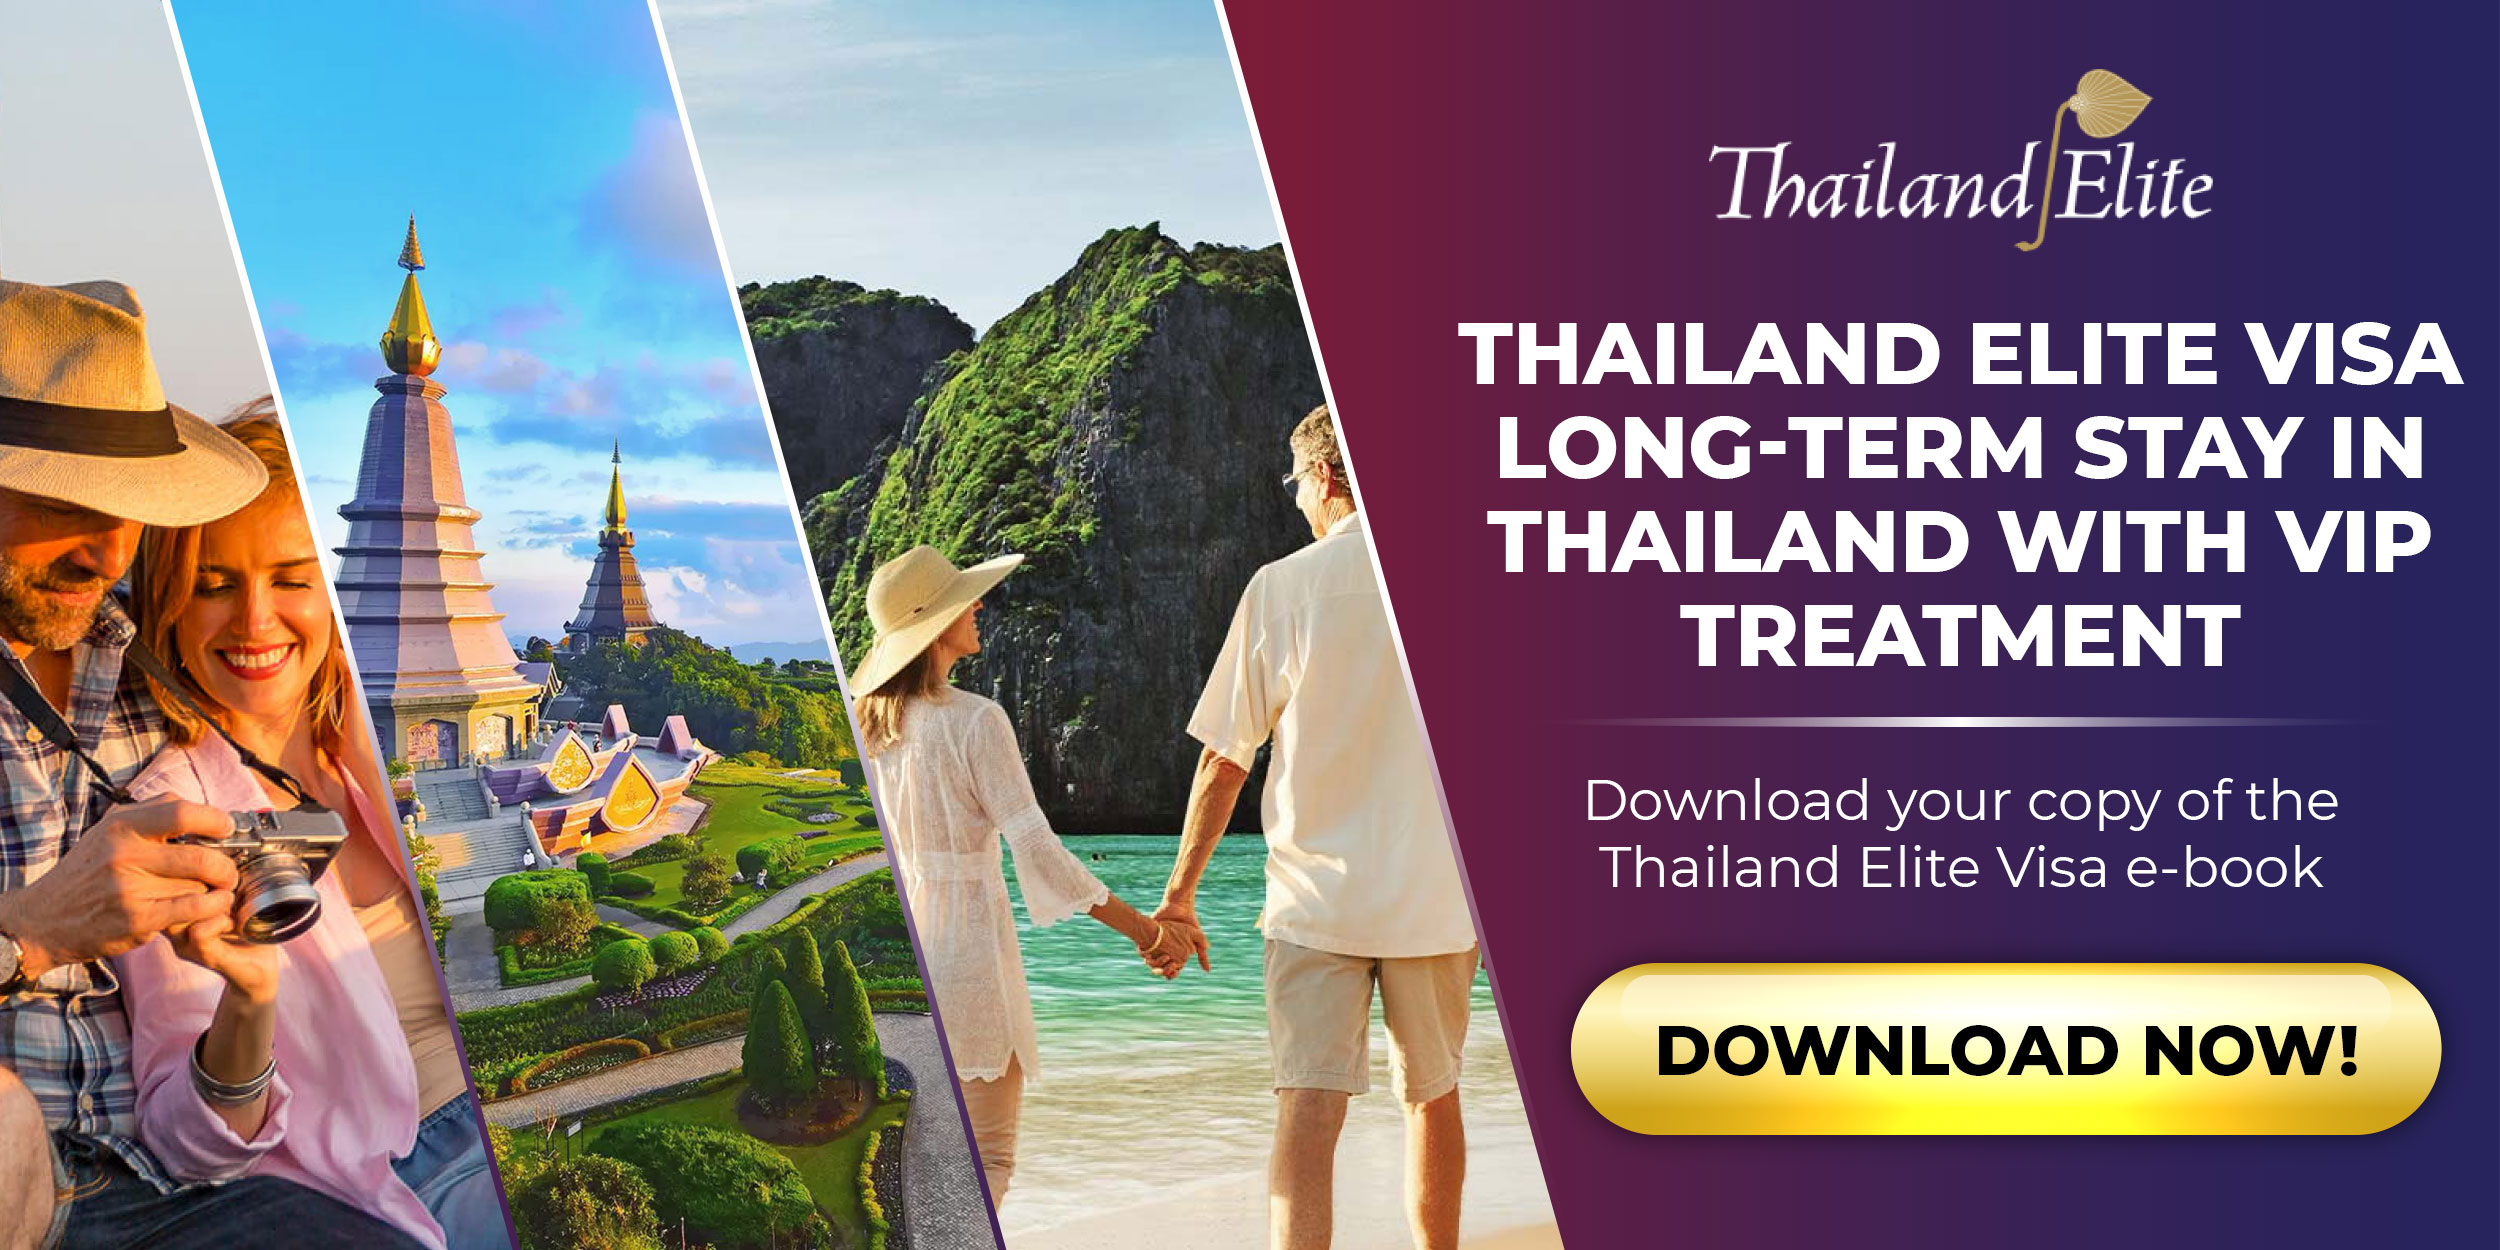 Thai Elite eBook Download Now